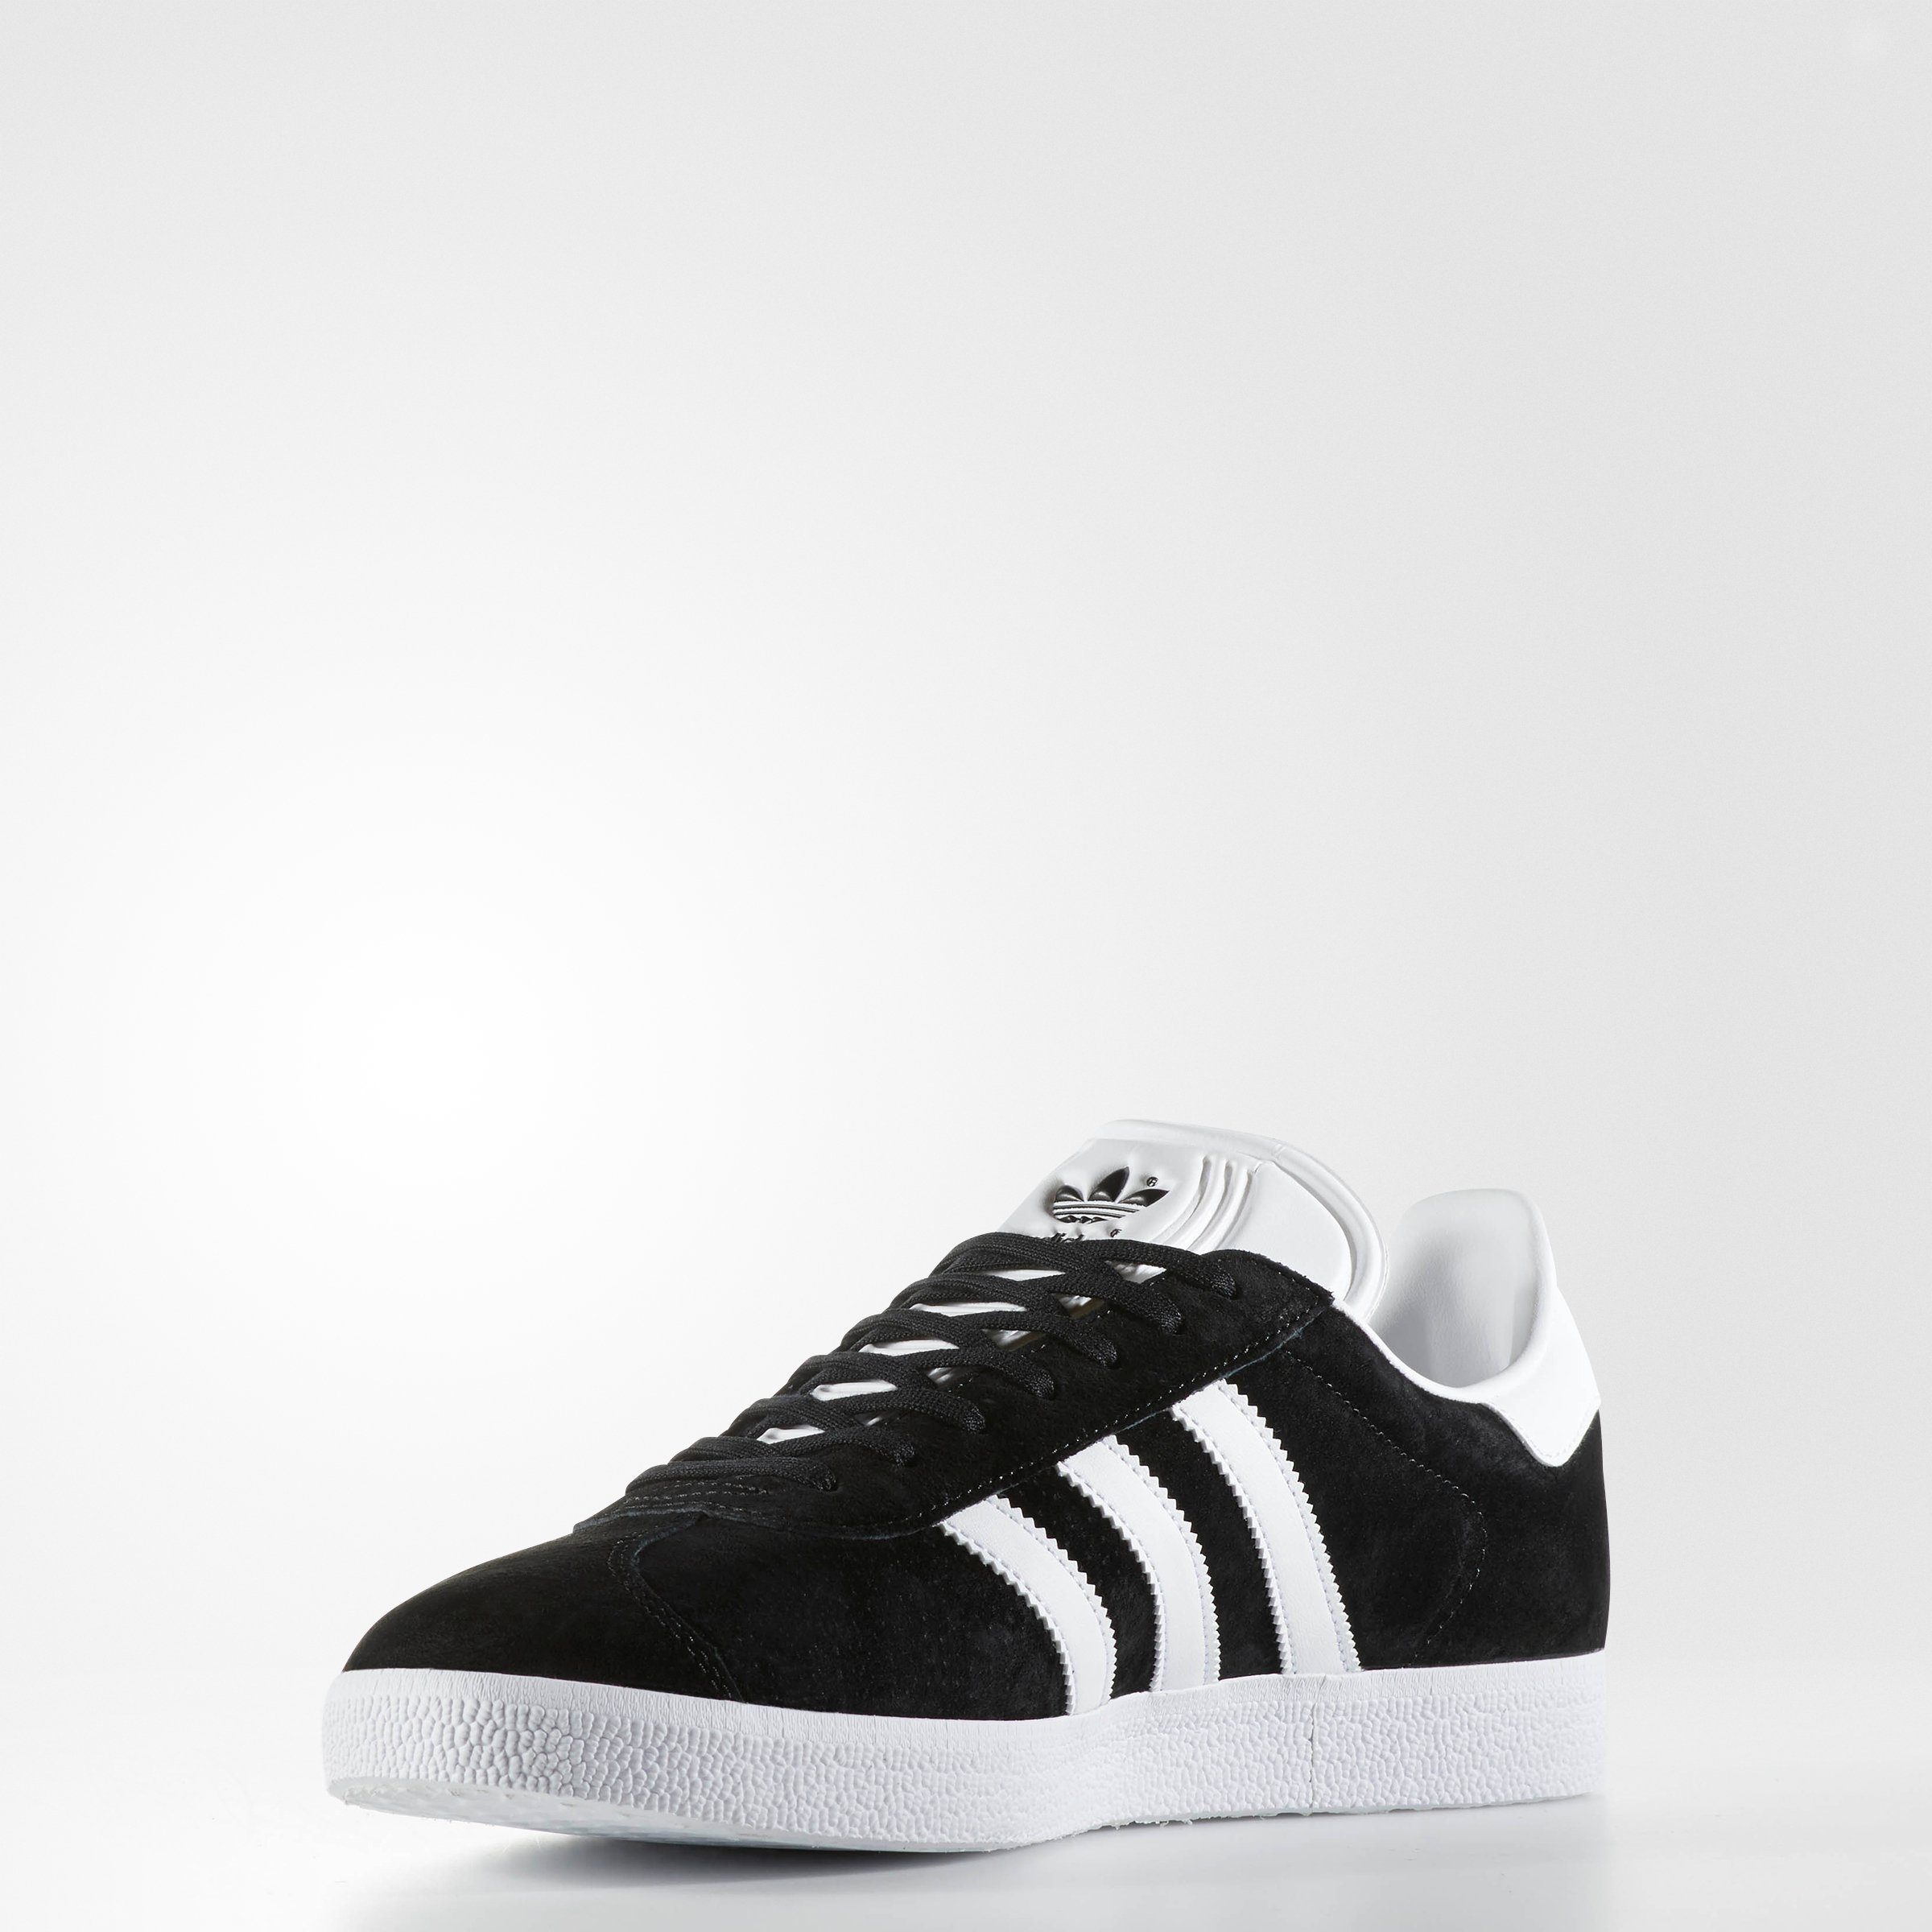 CBLACK-WHITE-GOLDMT Sneaker GAZELLE Originals adidas